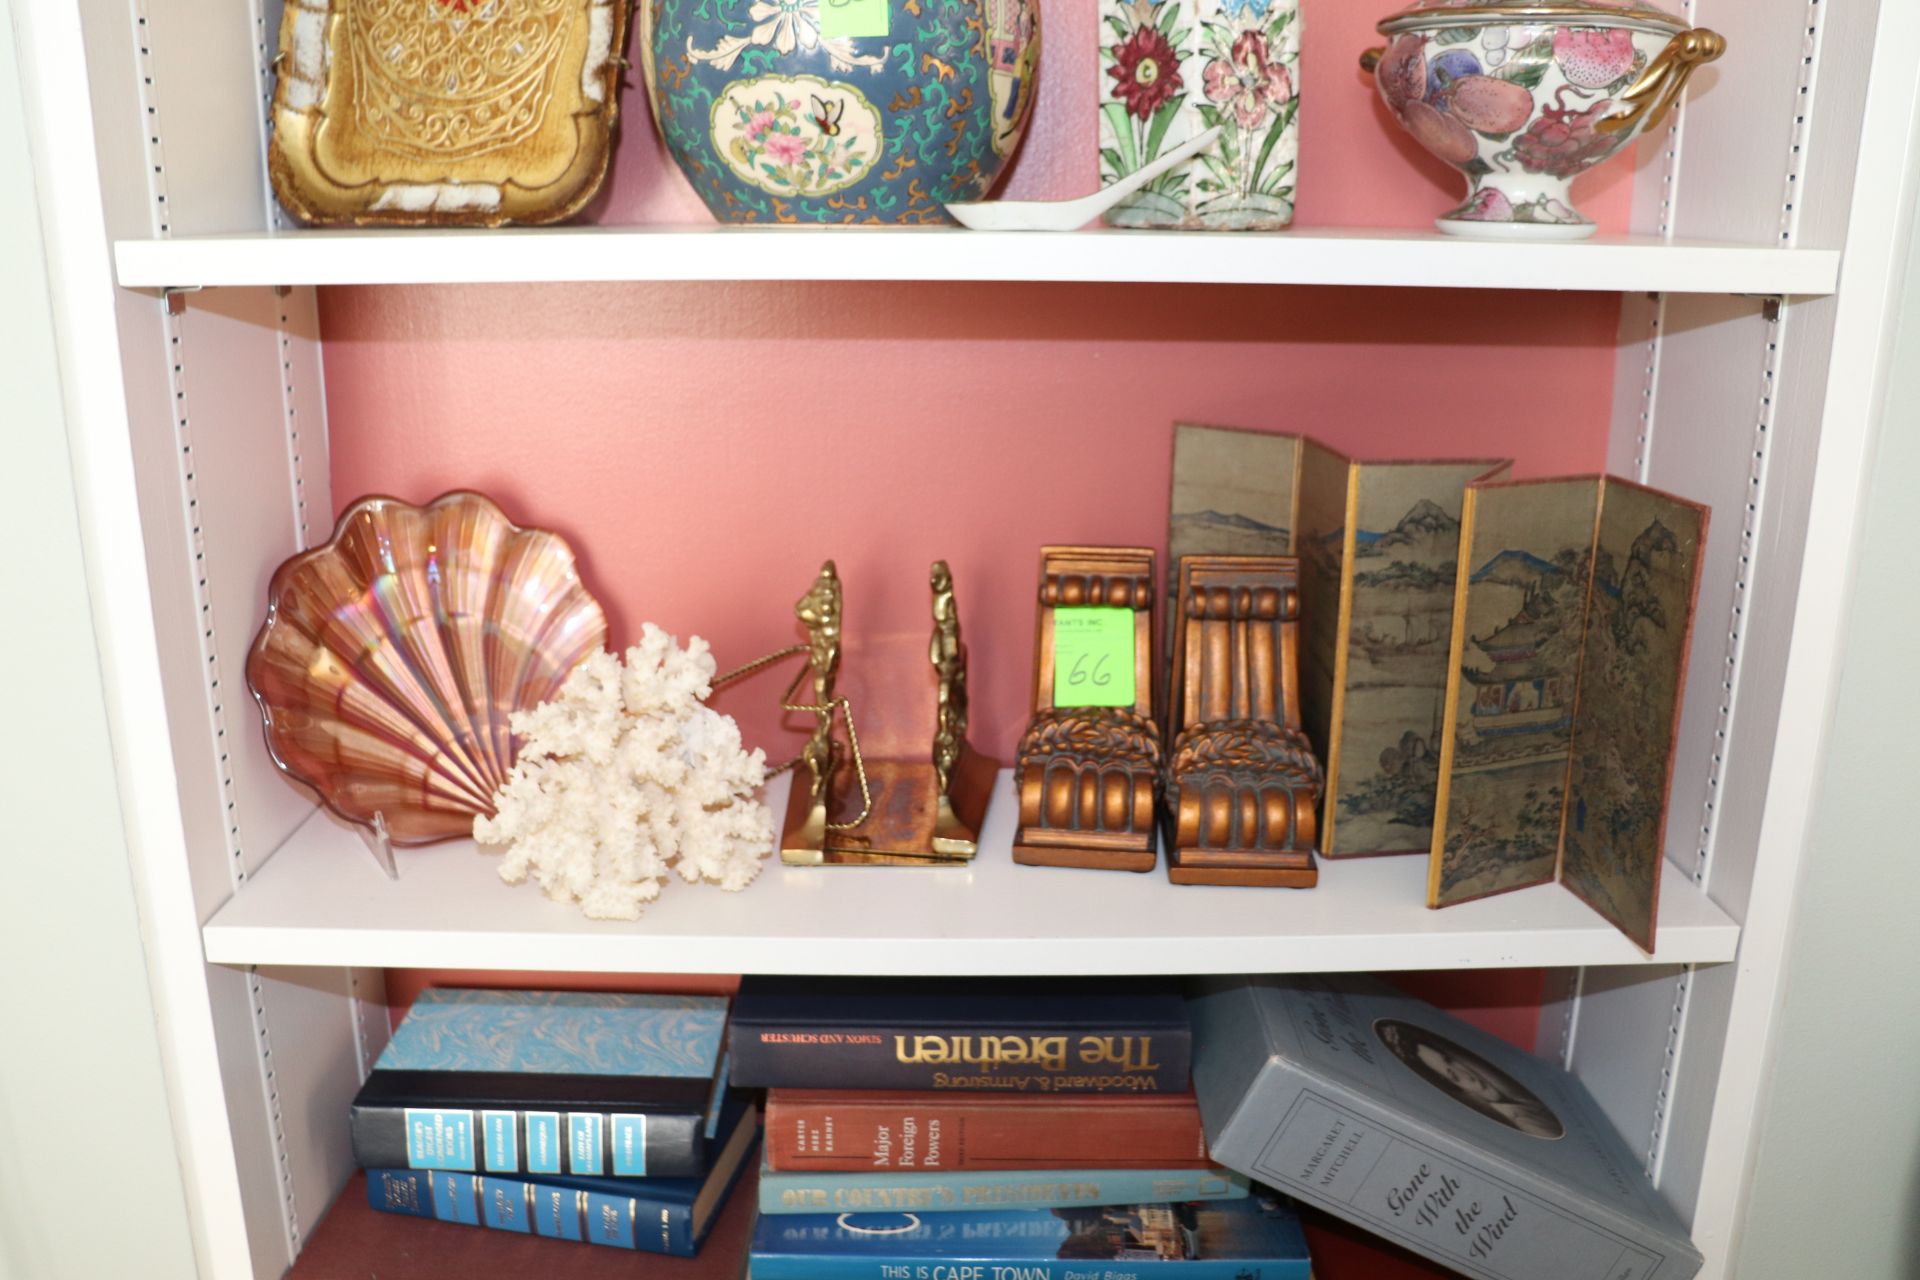 Miscellaneous décor on shelf